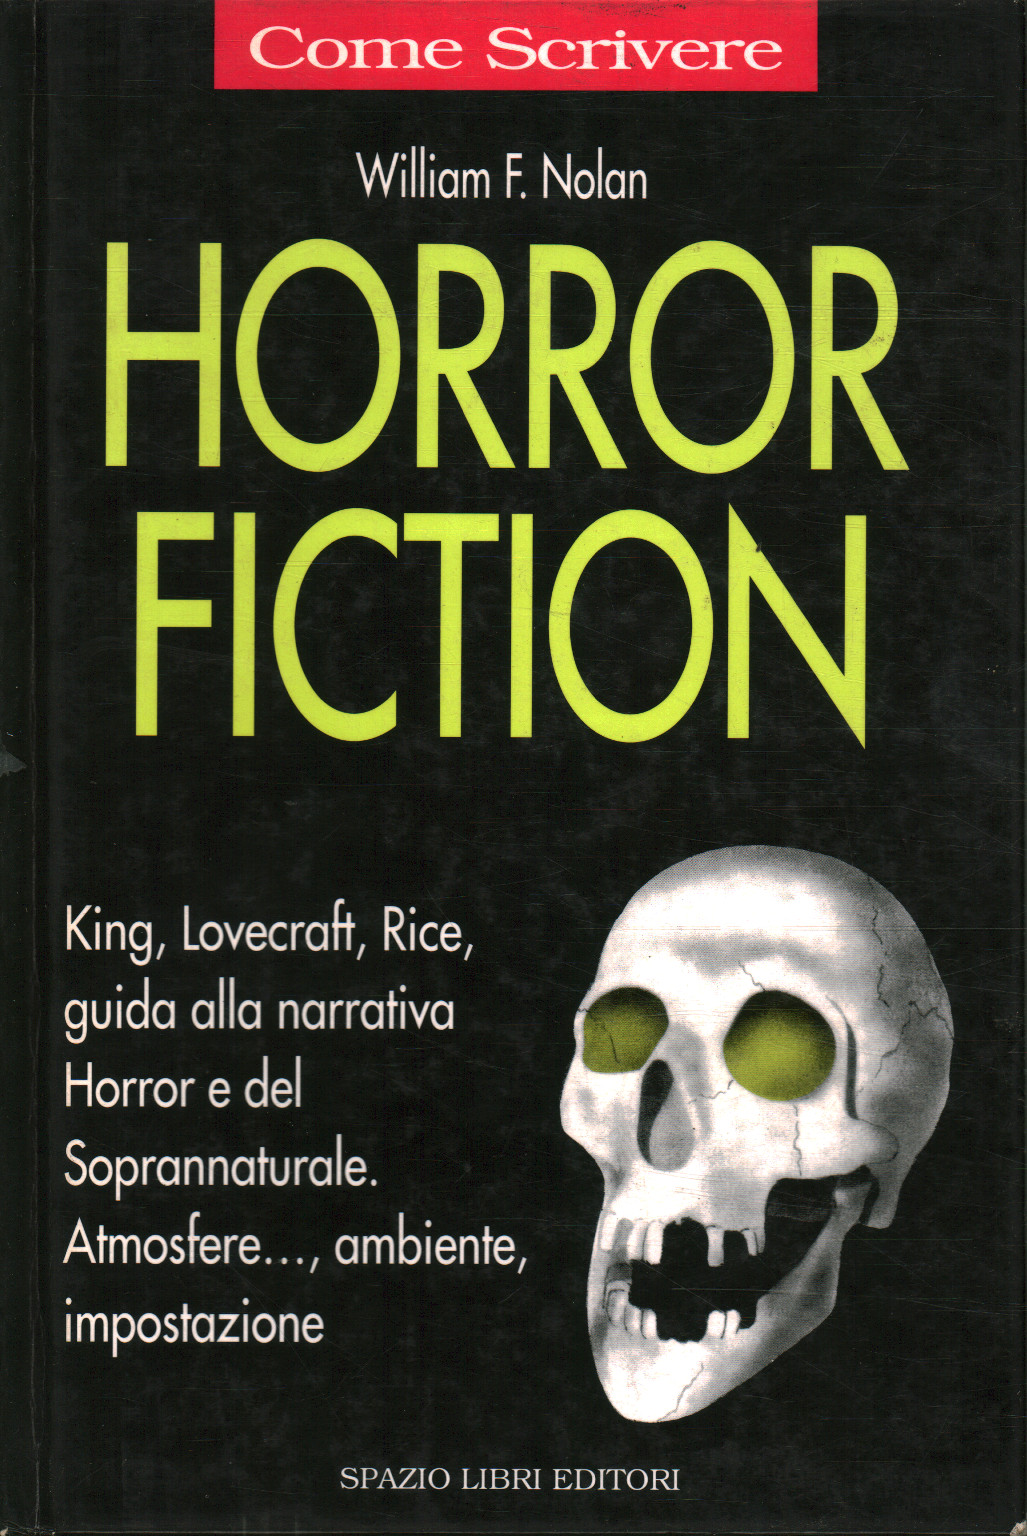 How to write Horror Fiction